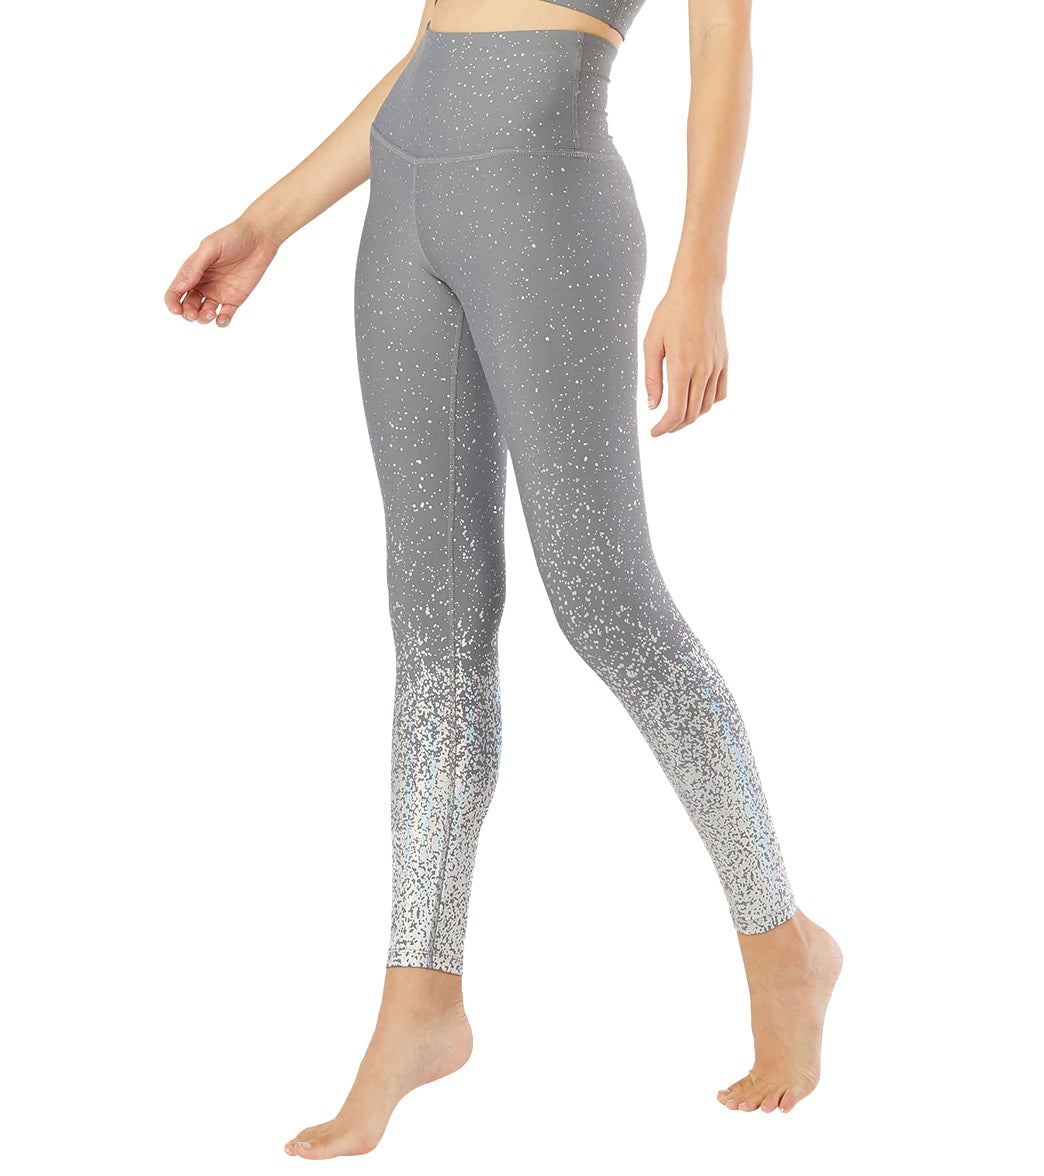 Beyond Yoga Grey with Silver Polka Dots Leggings- Size XS (Inseam